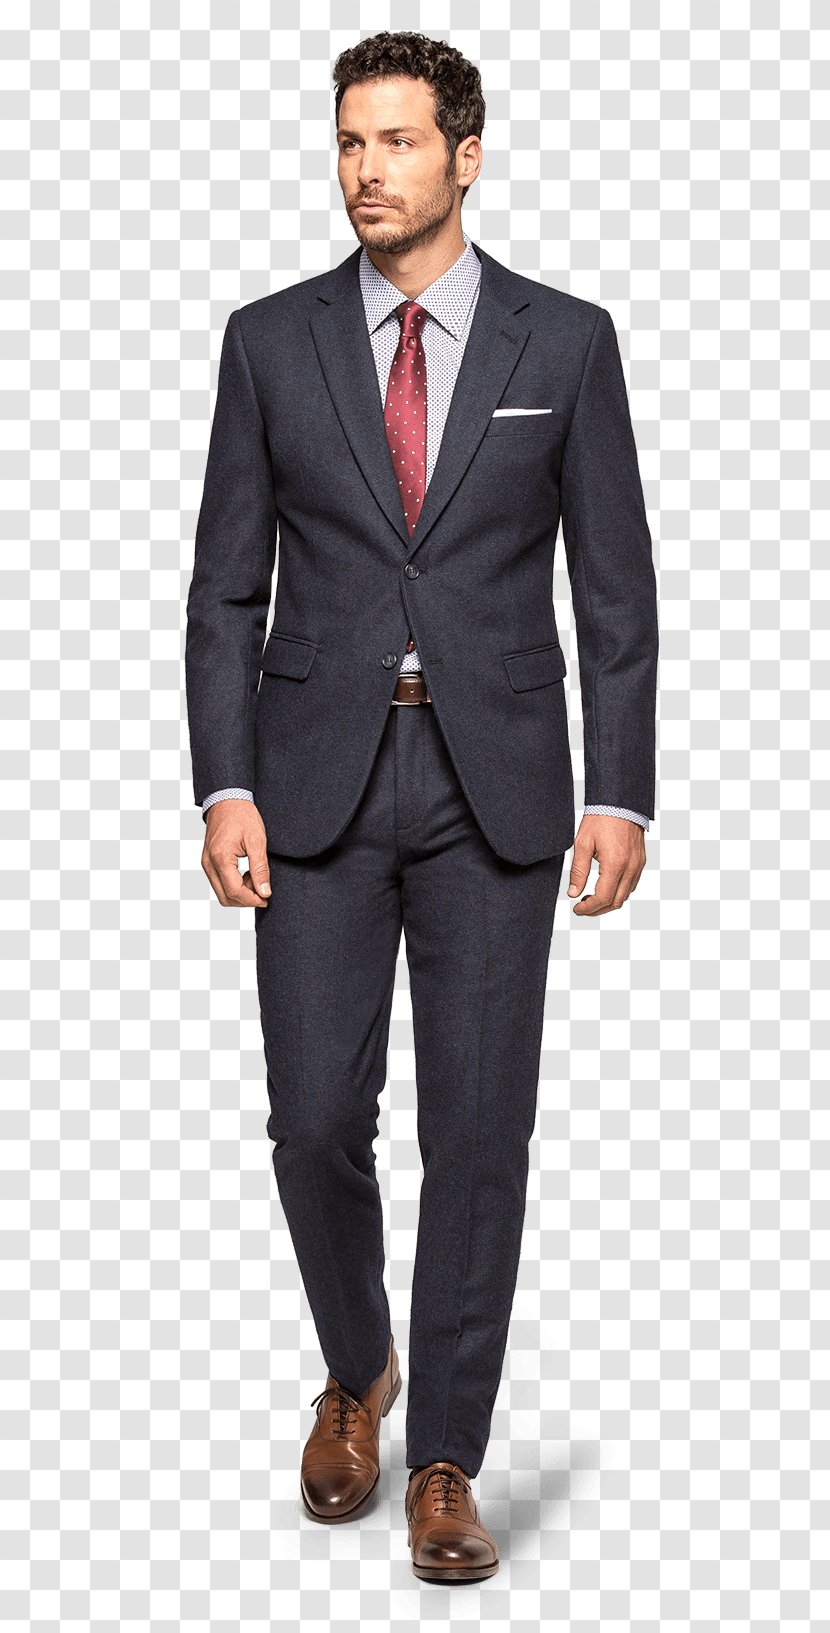 Kurt Angle Blazer Suit Jacket JoS. A. Bank Clothiers - Gentleman Transparent PNG